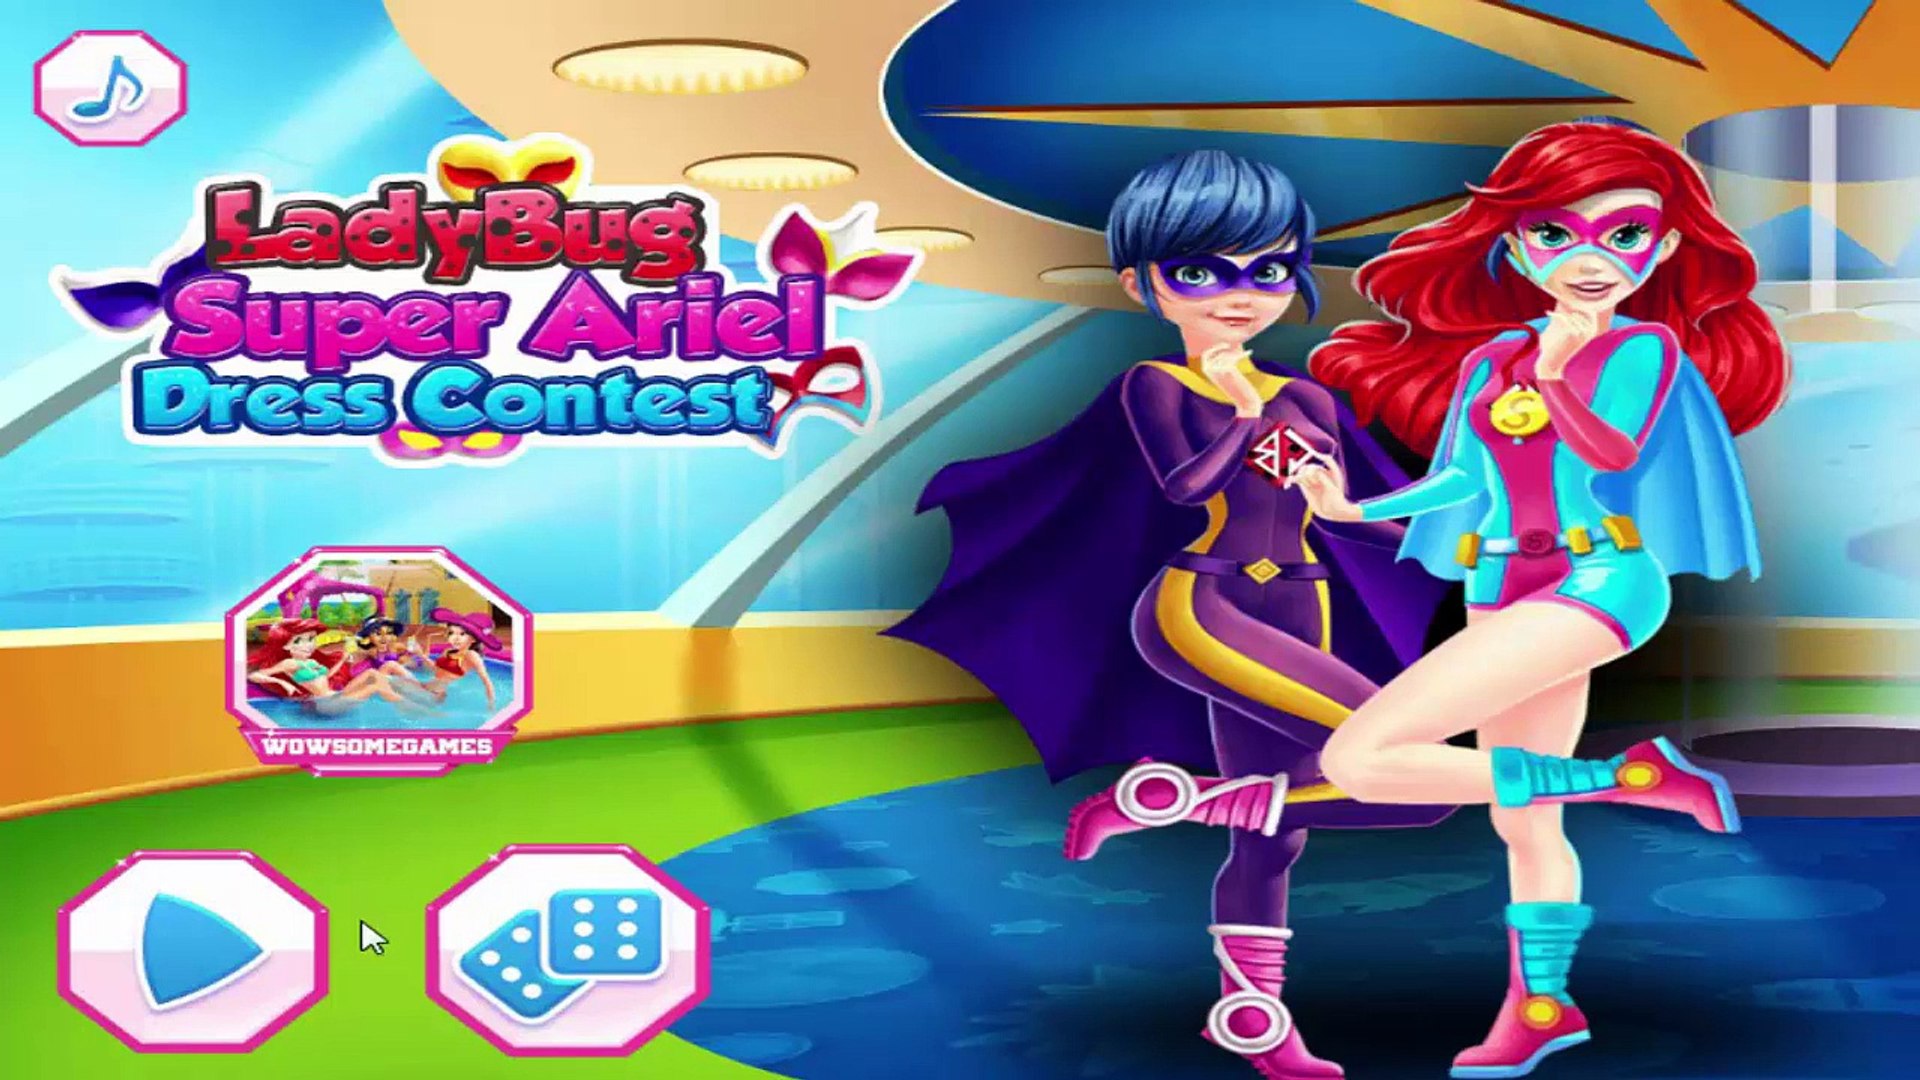 Ladybug Super Ariel Dress Contest - Ladybug Video Game For Girls